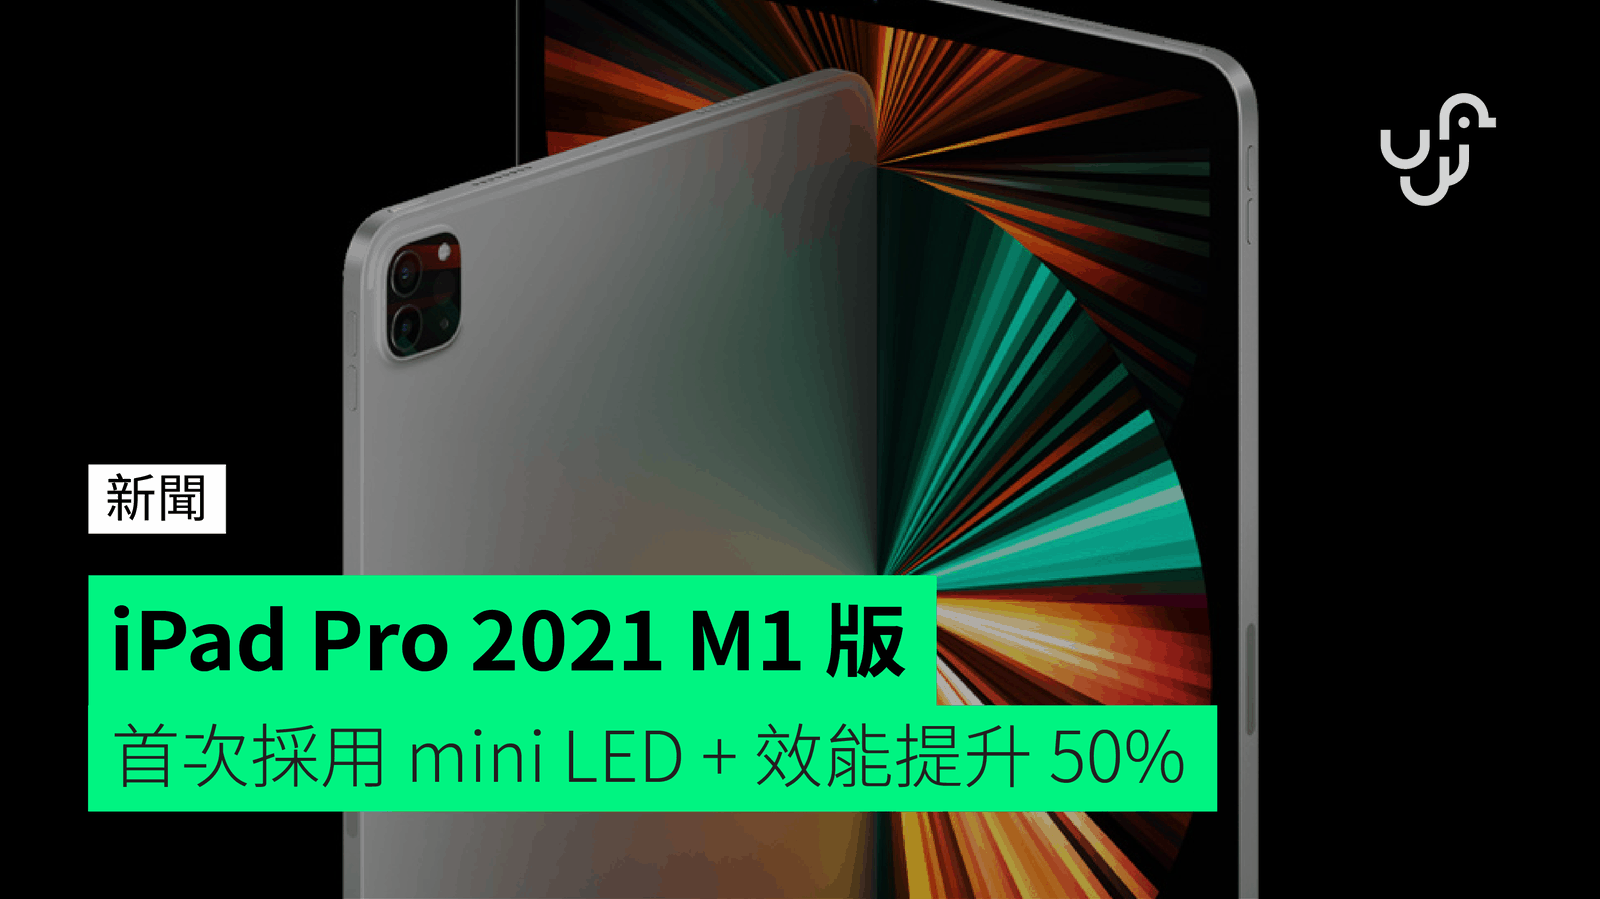 iPad Pro 2021 M1 版 首次採用 mini LED + 效能提升 50% - 香港 unwire.hk